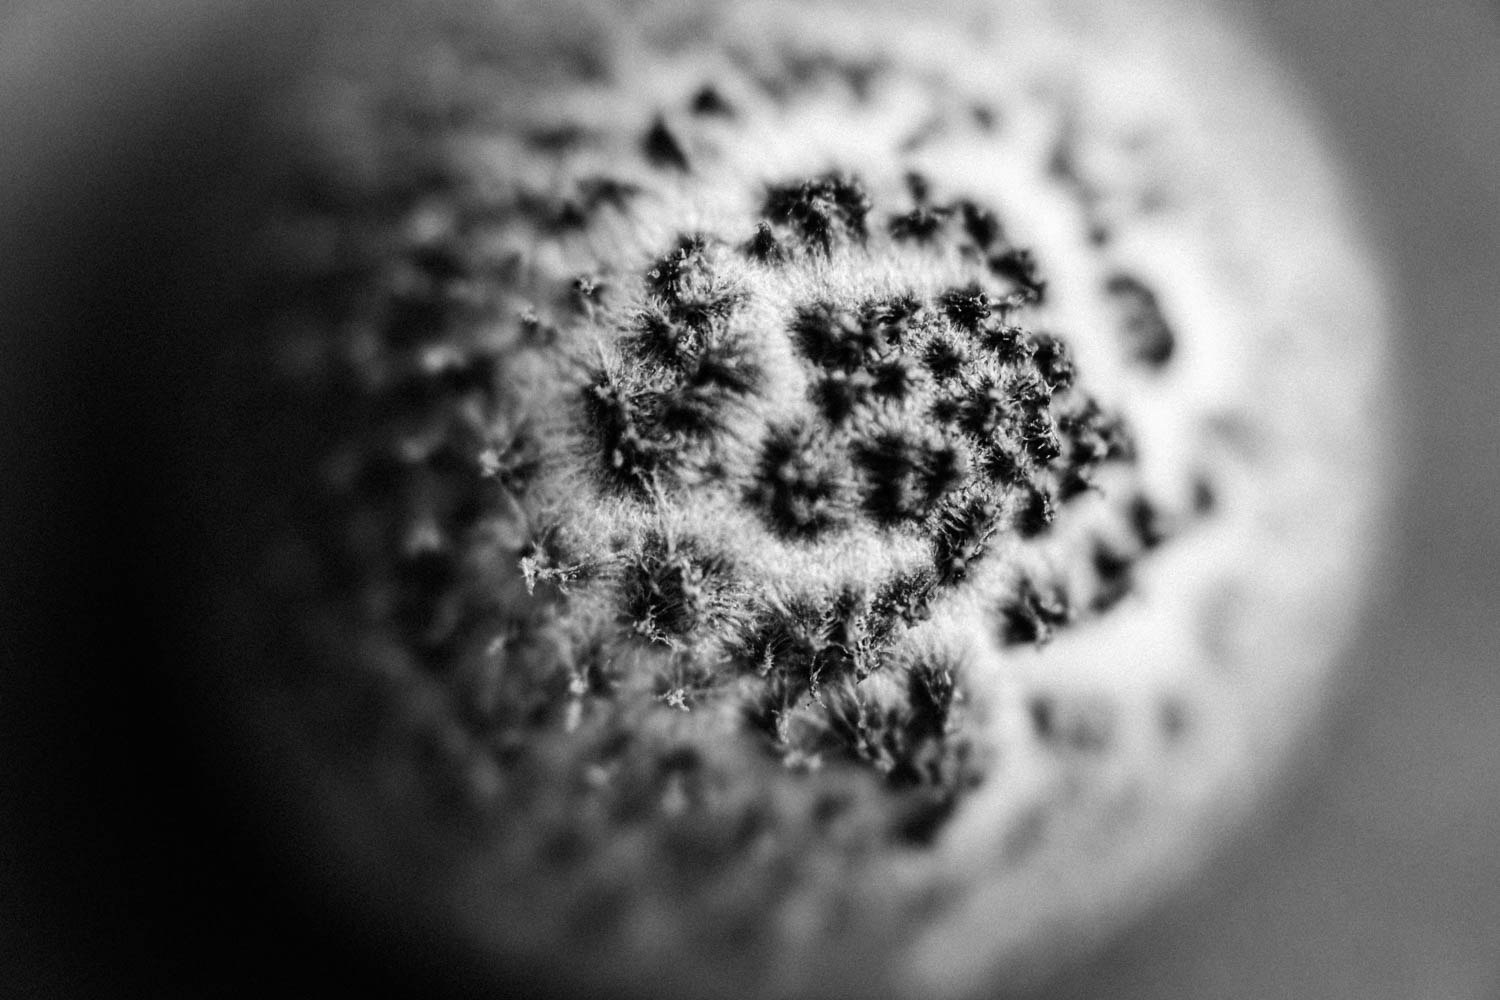 Harvested wild mushroom cap black and white photo.